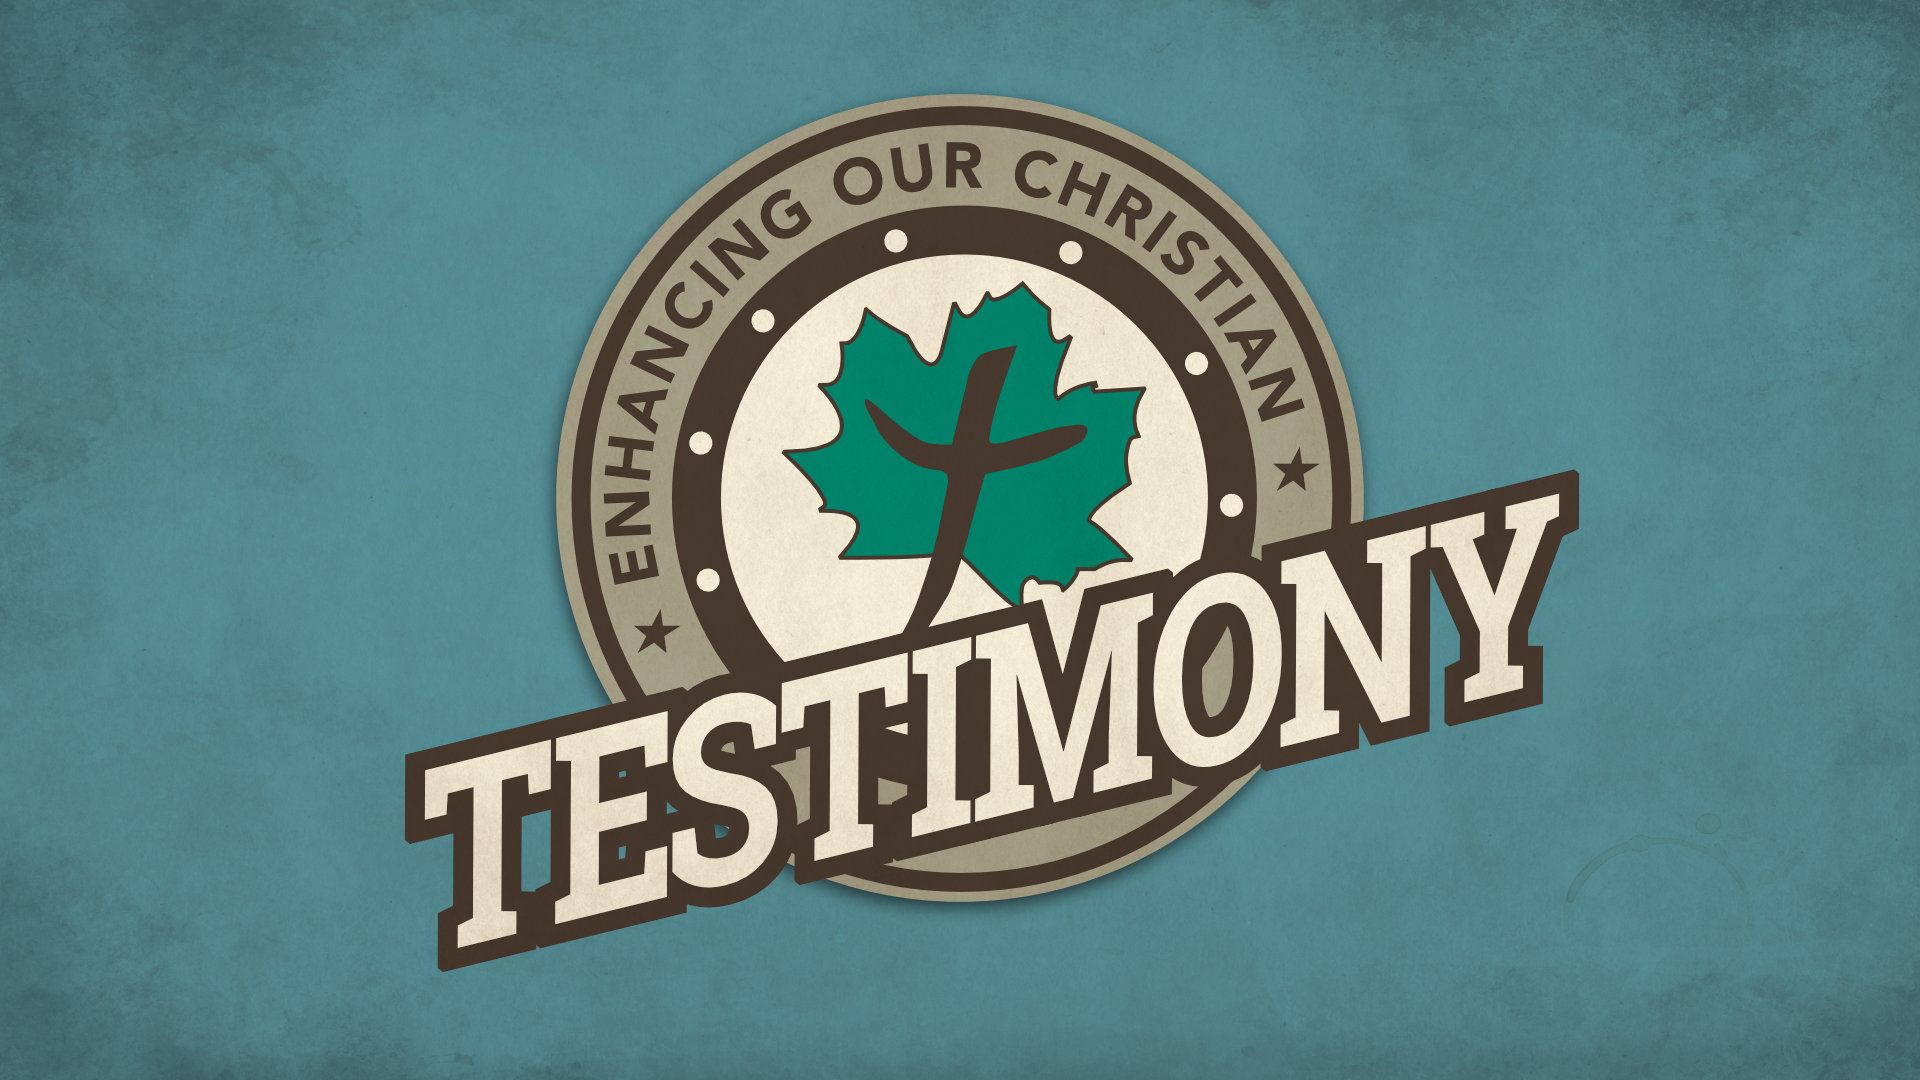 Enhancing Our Christian Testimony • Mar. 5 - April 2, 2017